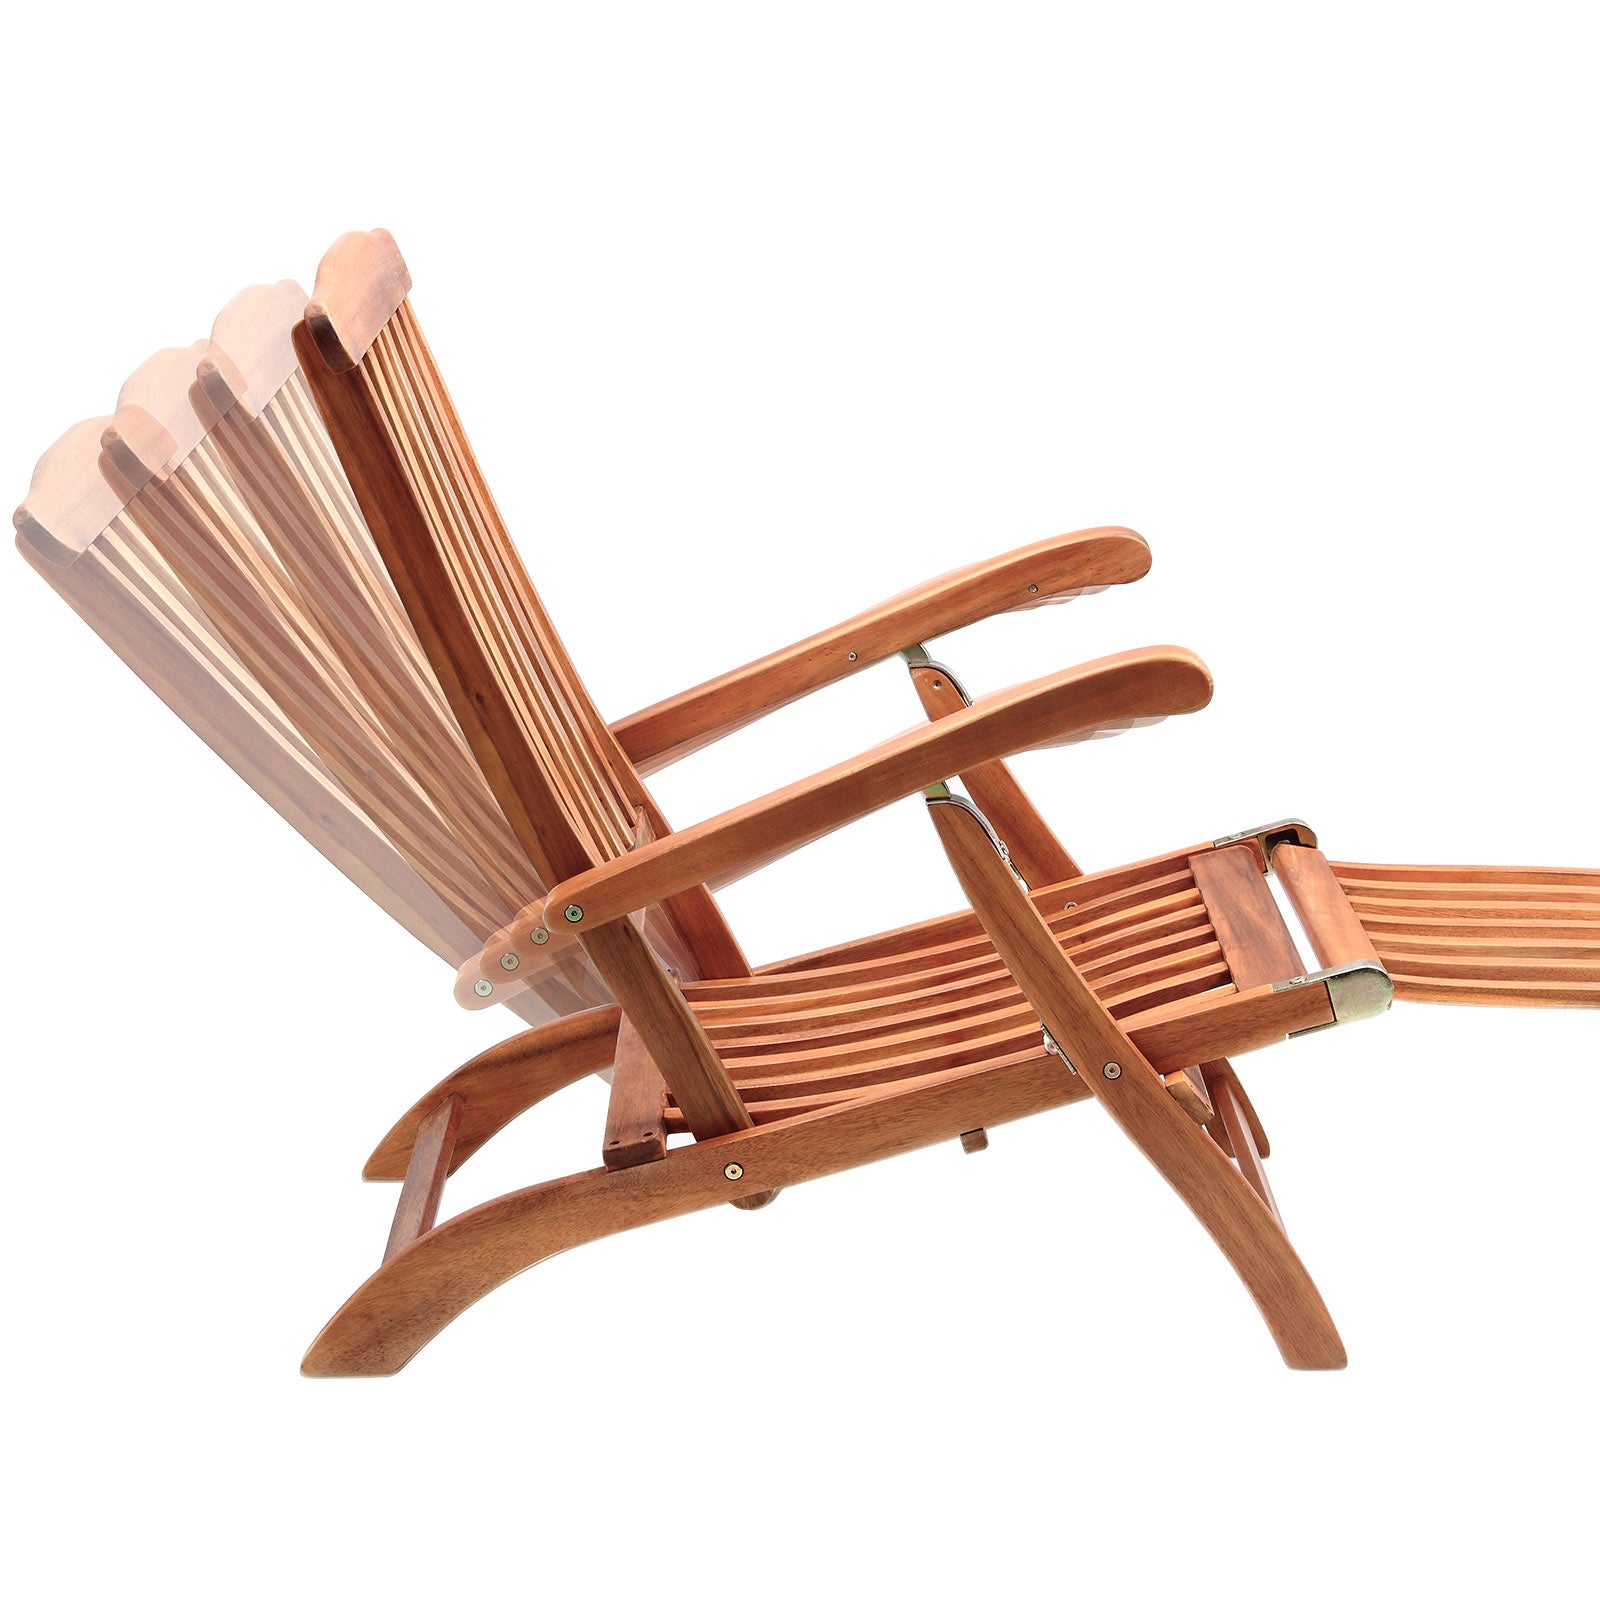 Nancy's Village St. George Foldable Lounger - Garden Furniture - Adjustable Backrest - Sun Chair - Acacia Wood